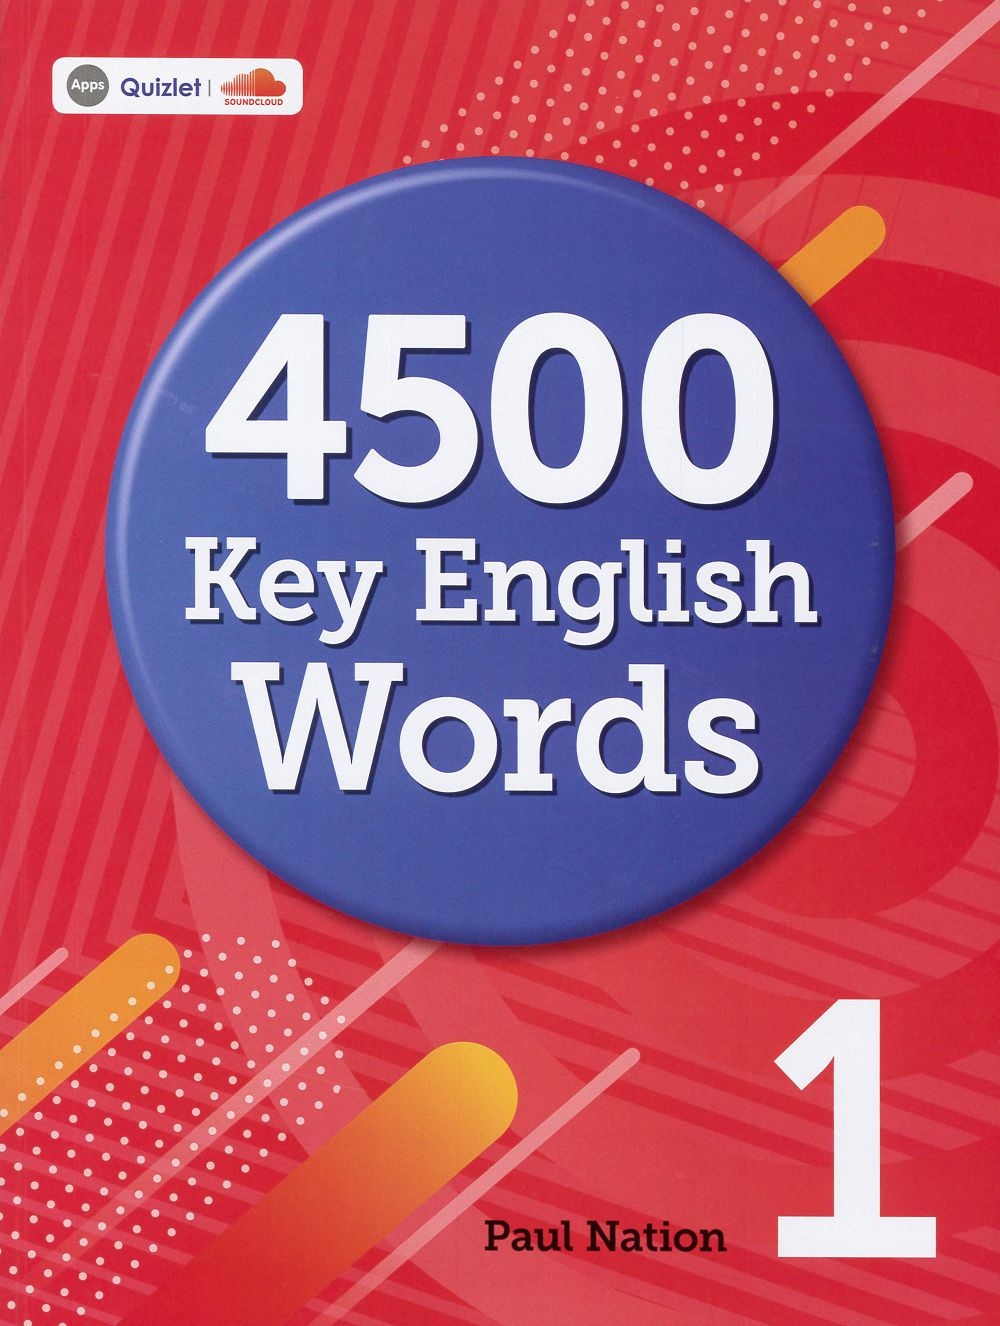 4500 Key English Words（1）